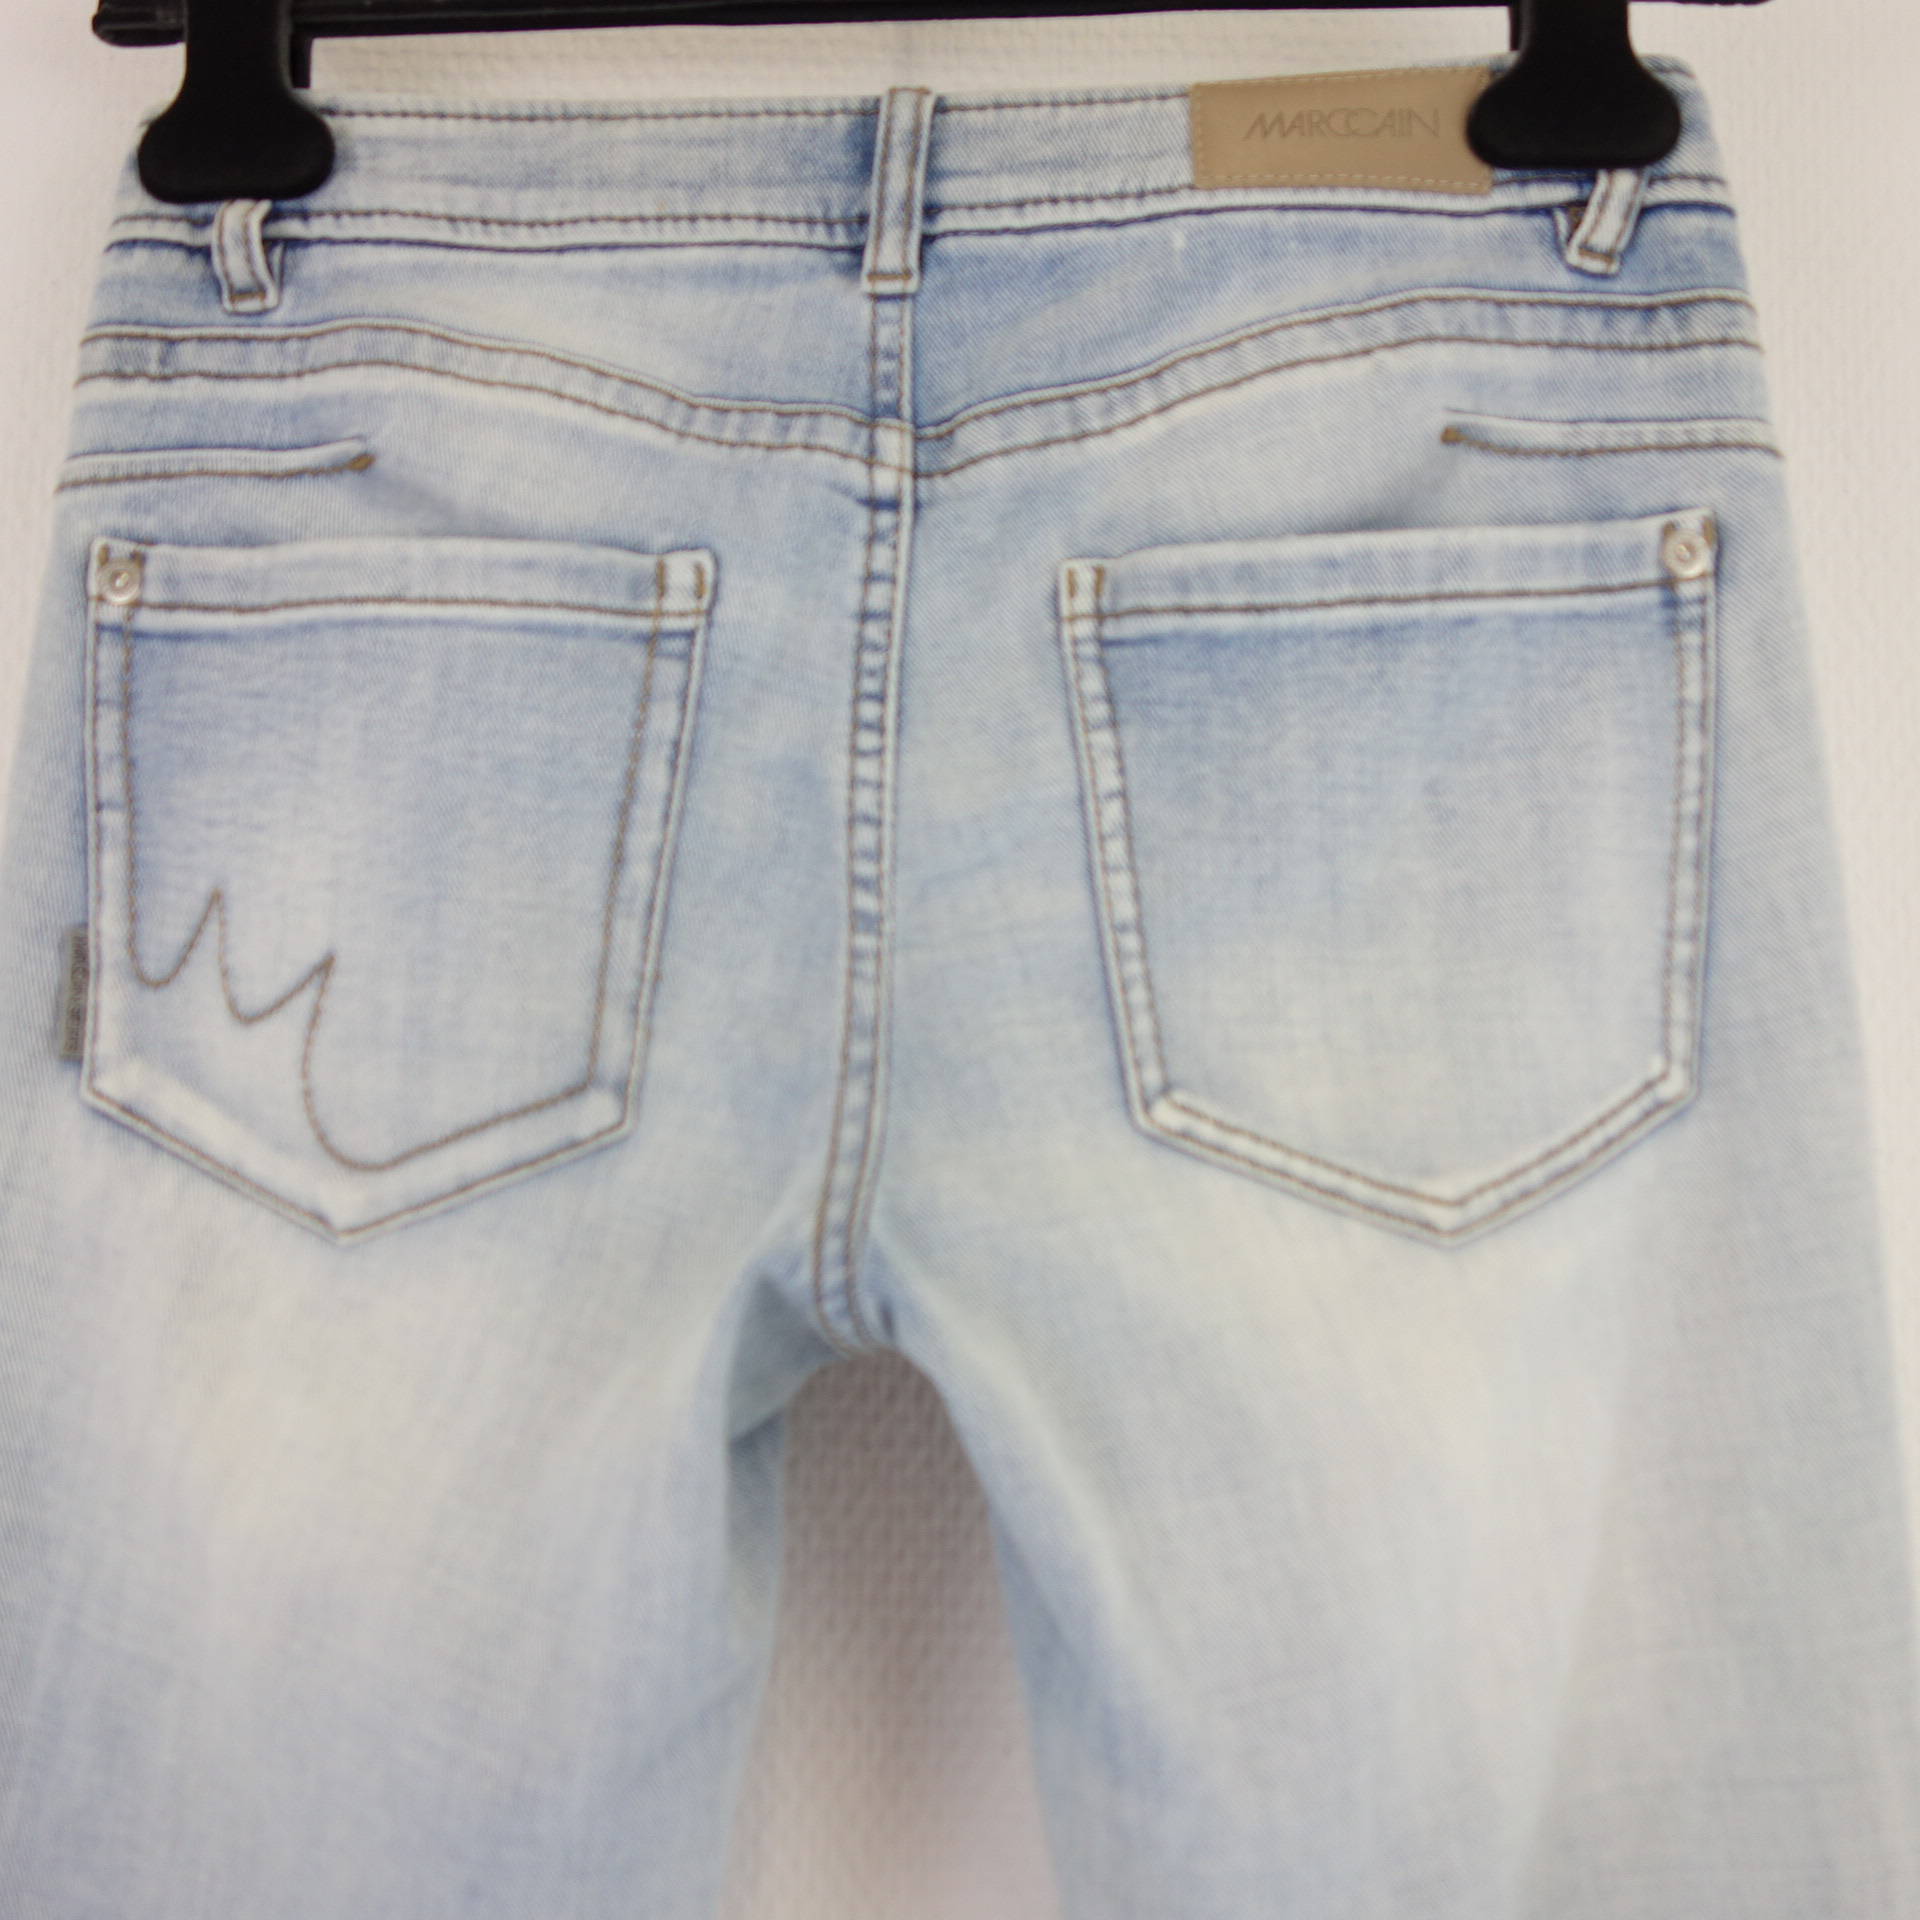 MARC CAIN Sports Damen Jeans Hose Jeanshose Damenhose Blau Skinny Straß N1 34 